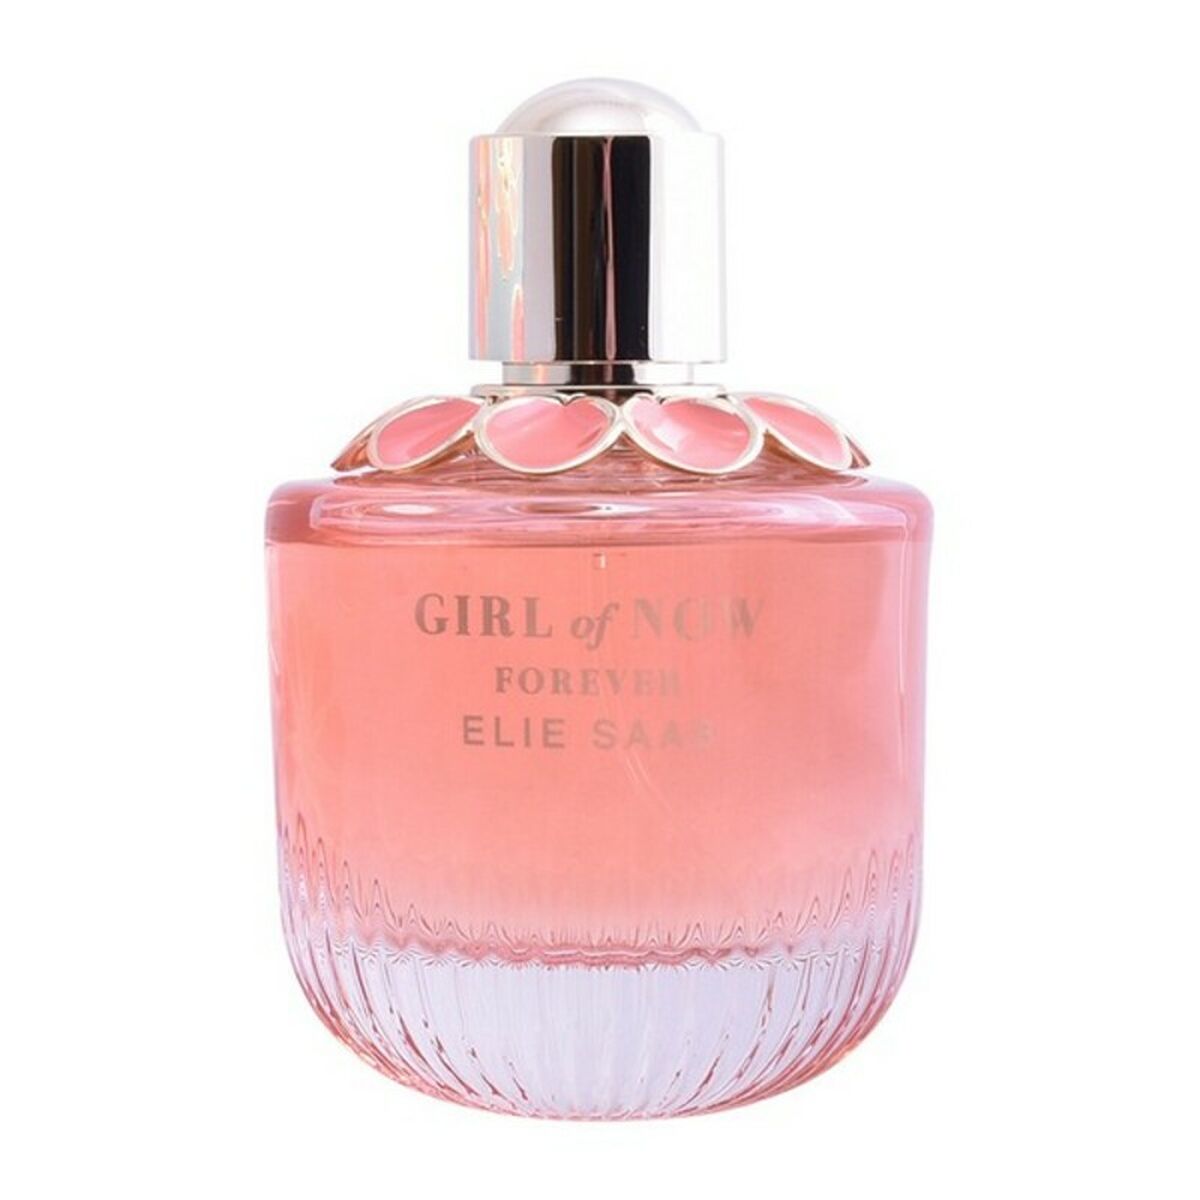 Ženski parfum Elie Saab Edp Girl of Now Fouen (90 ml)